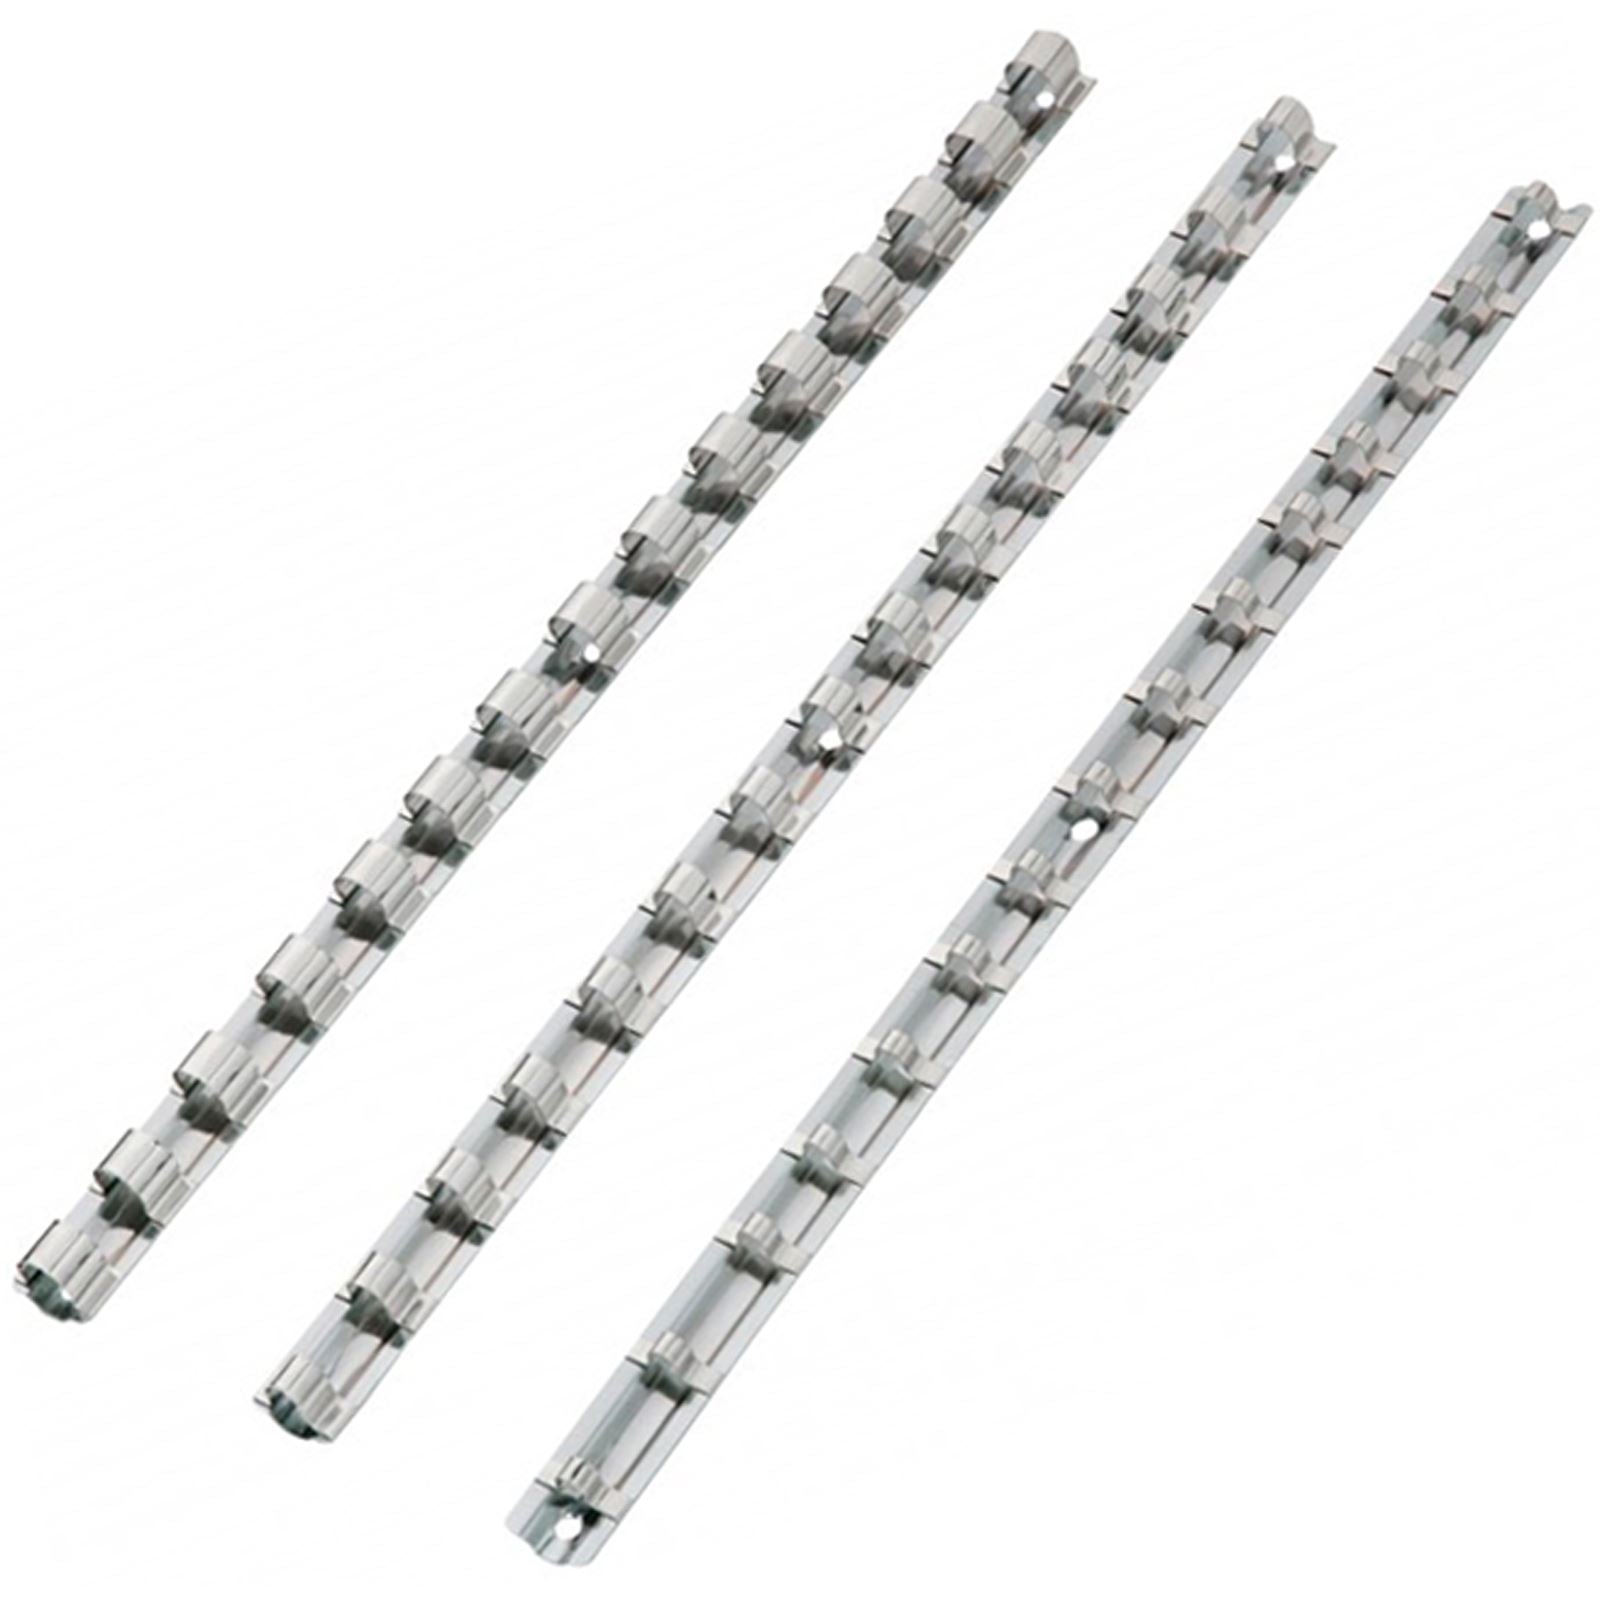 BlueSpot Steel Socket Rails for 1/4" 3/8" 1/2" Drive Sockets 3 Piece